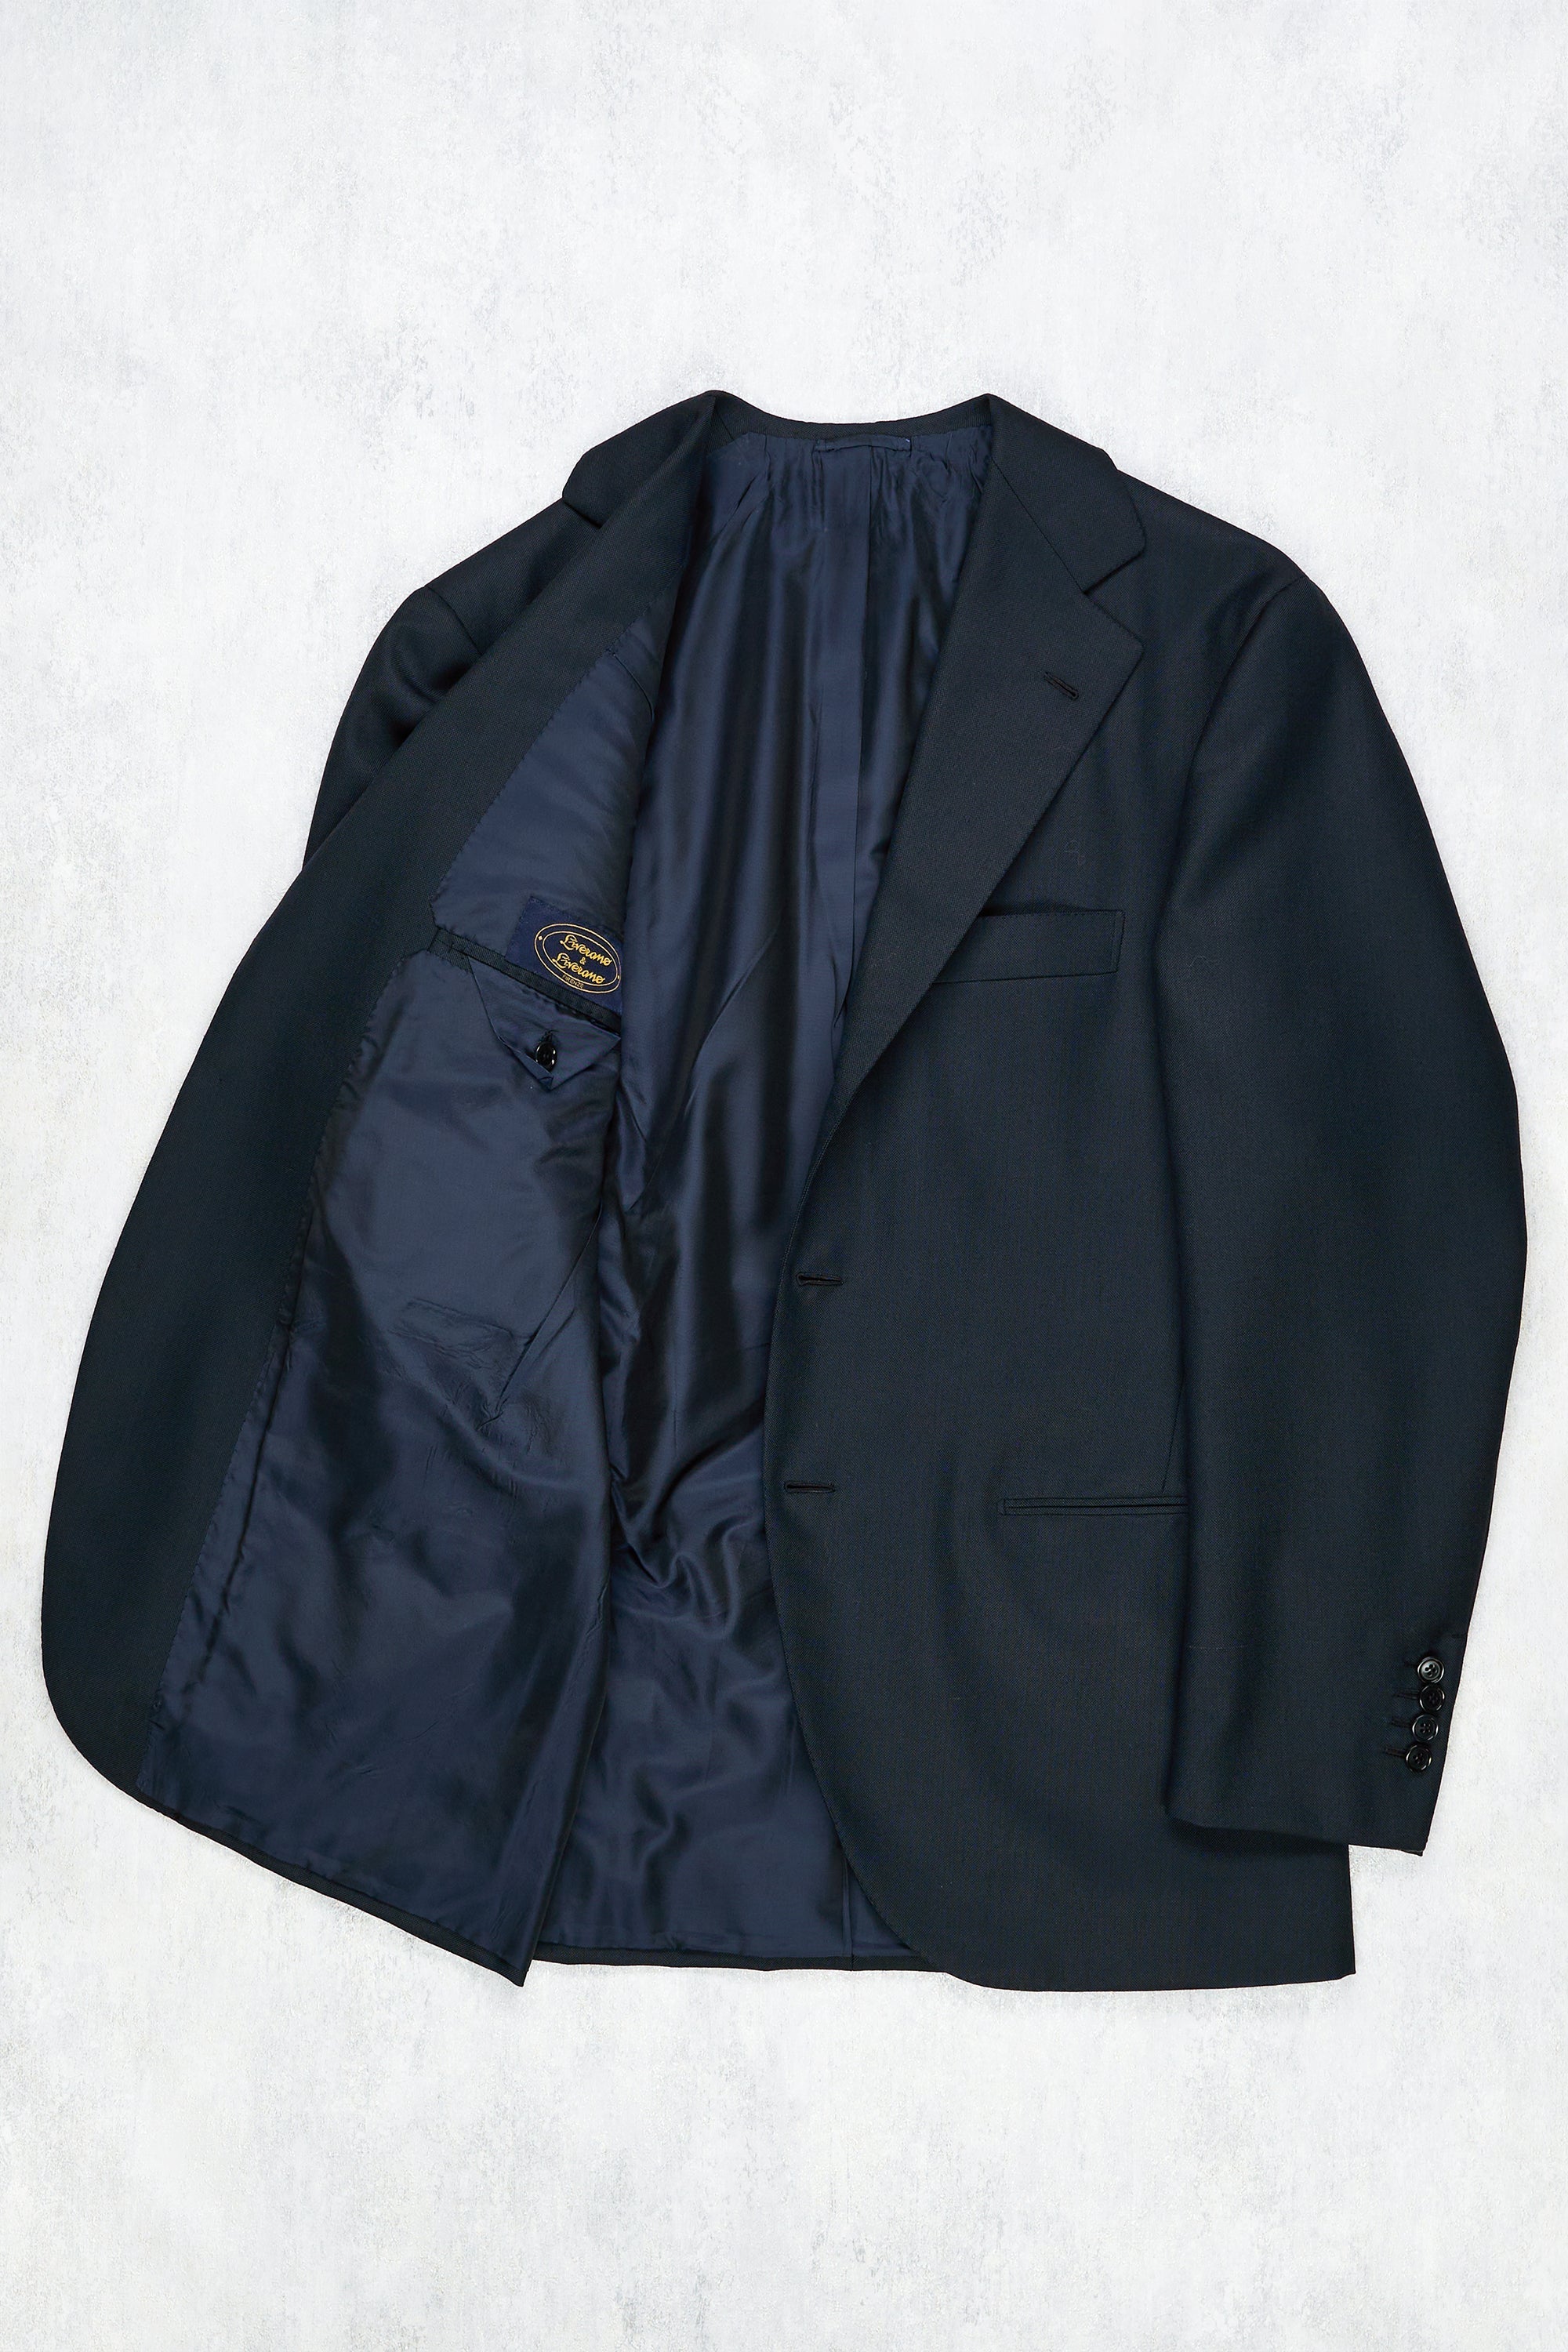 Liverano & Liverano Navy Wool Suit Bespoke